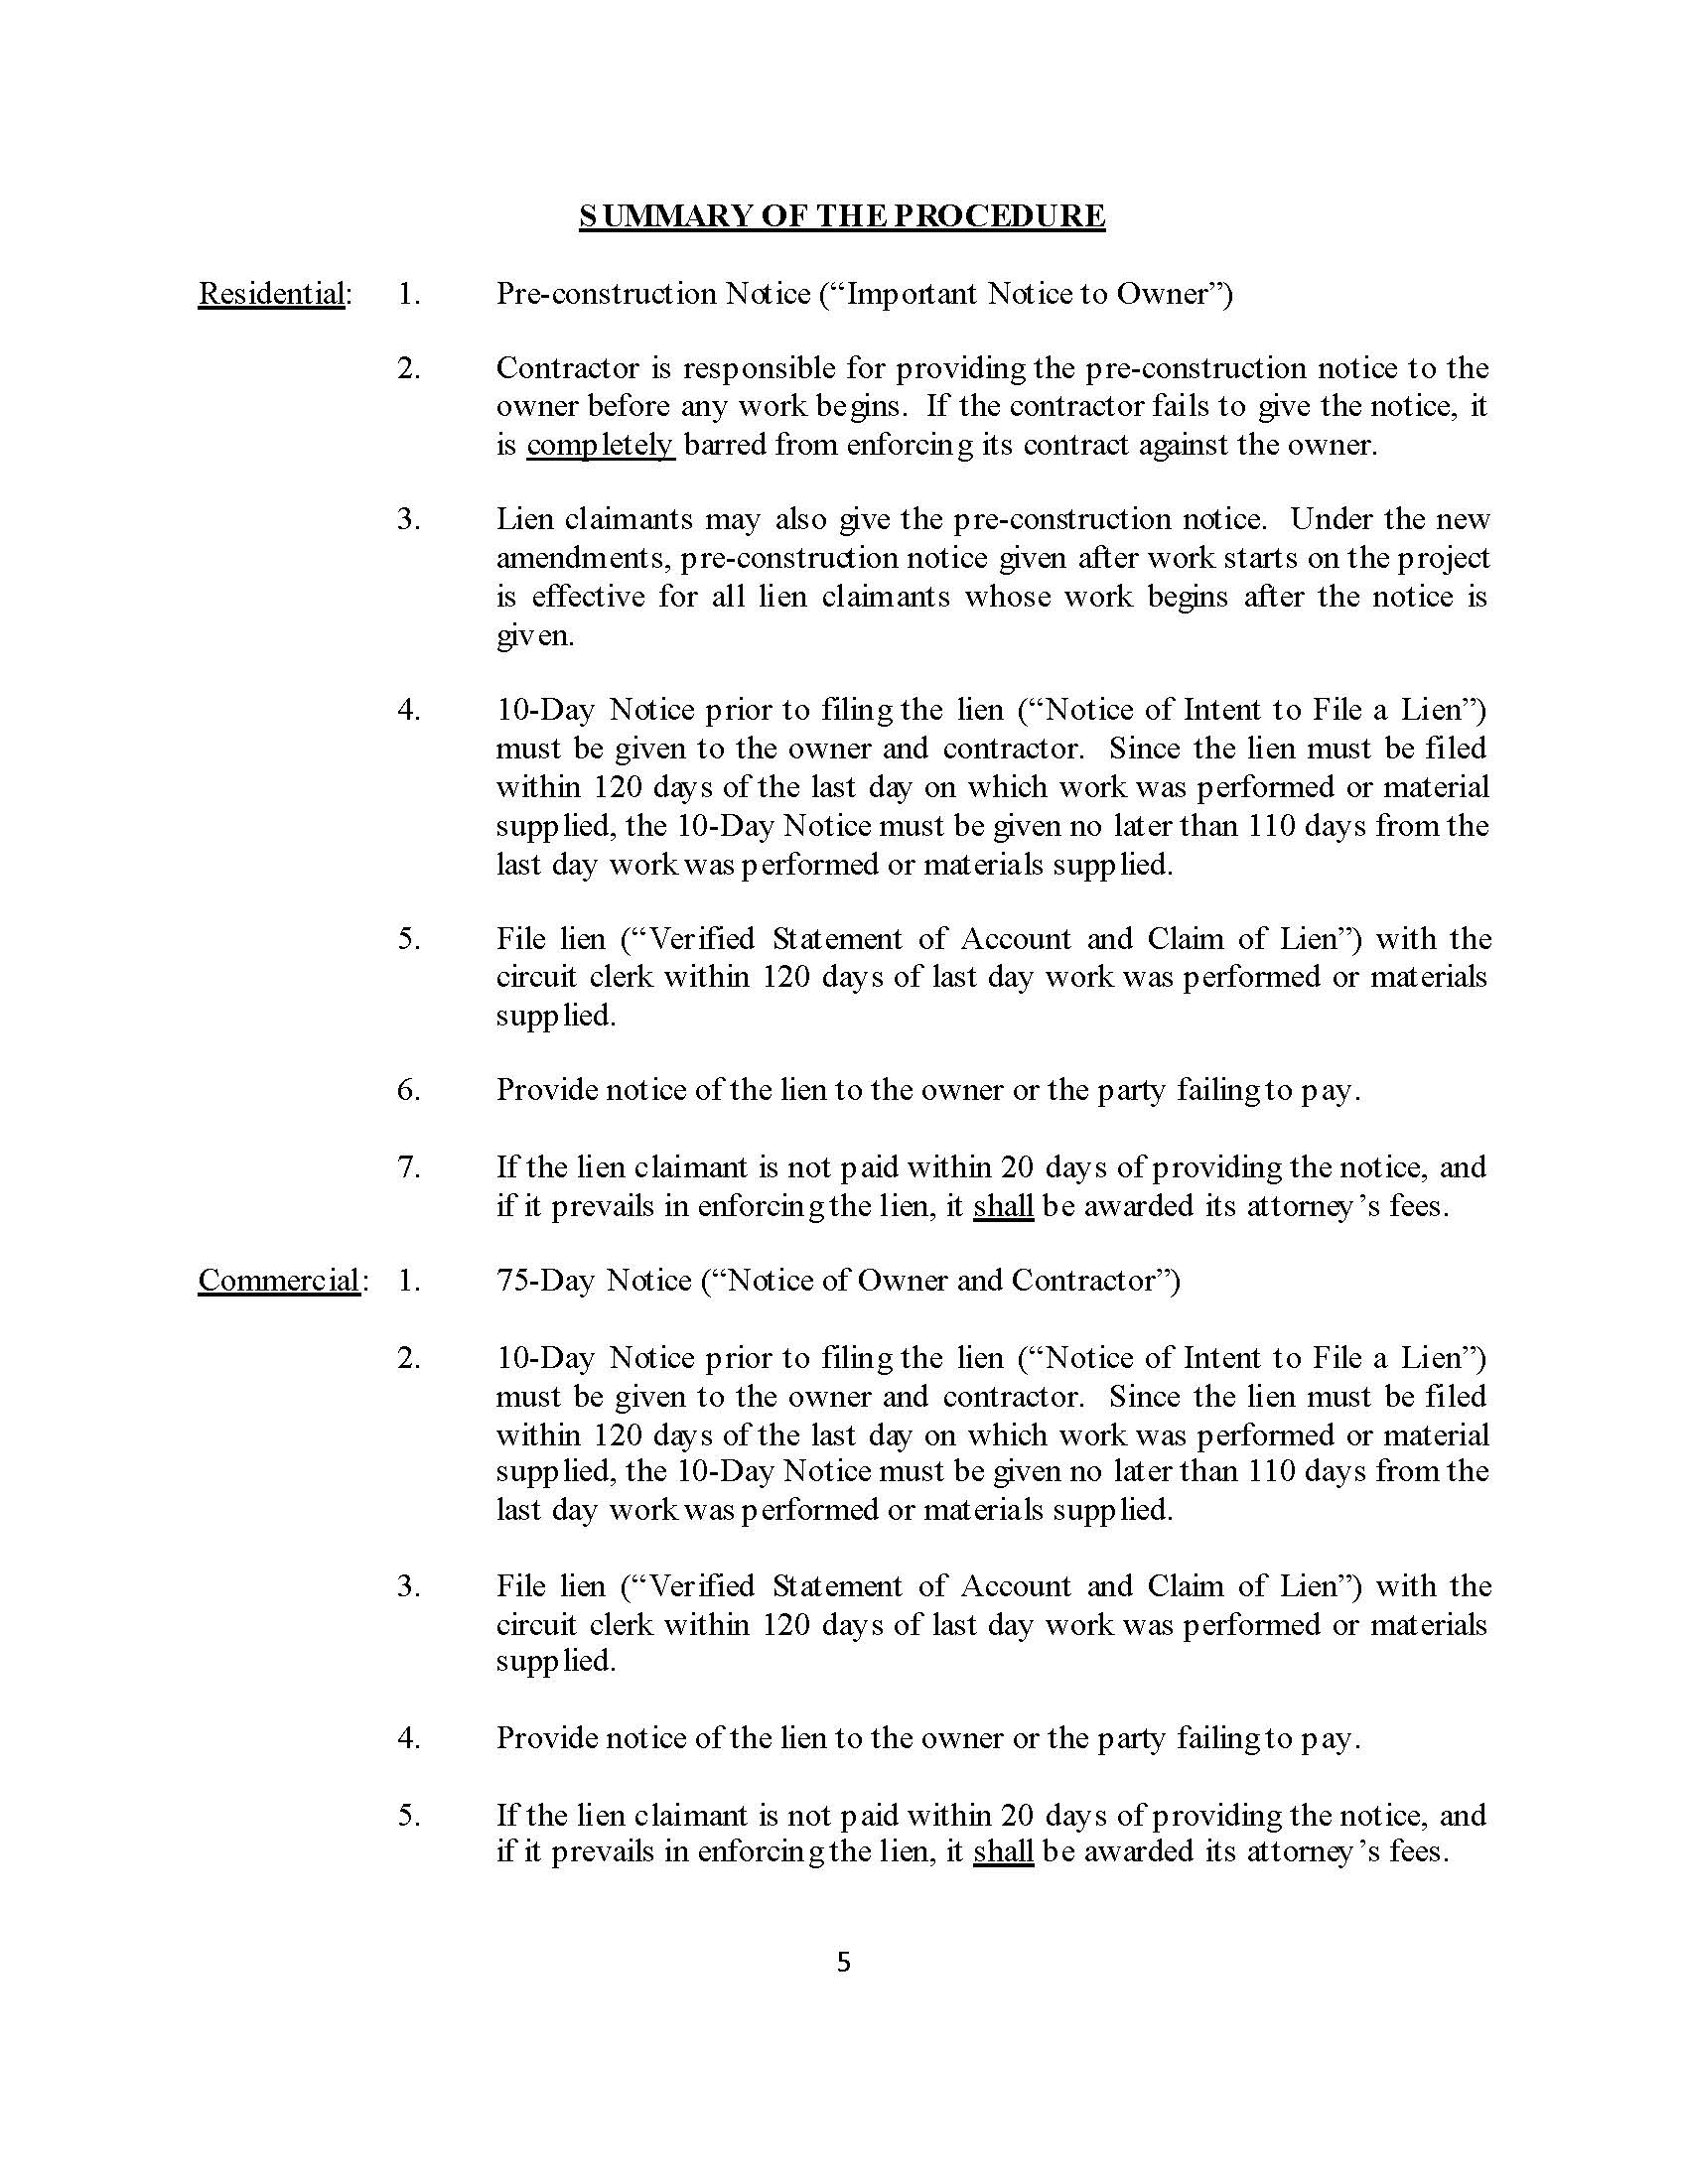 Summary-Materialman-Lien-Statutes-and-Amendments-faulkner-2011_Page_5.jpg